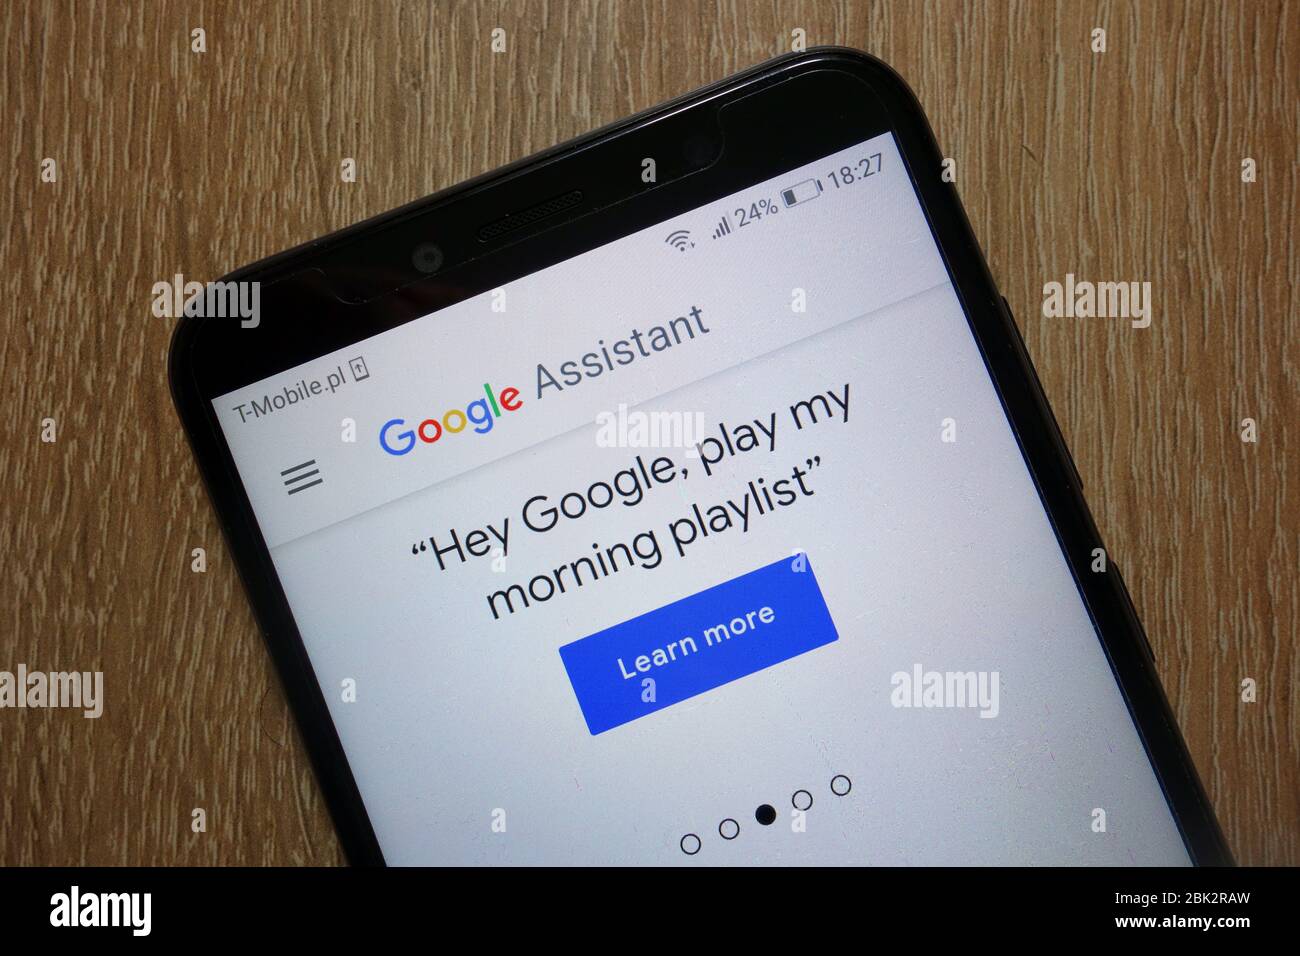 Google Assistant website displayed on smartphone Stock Photo